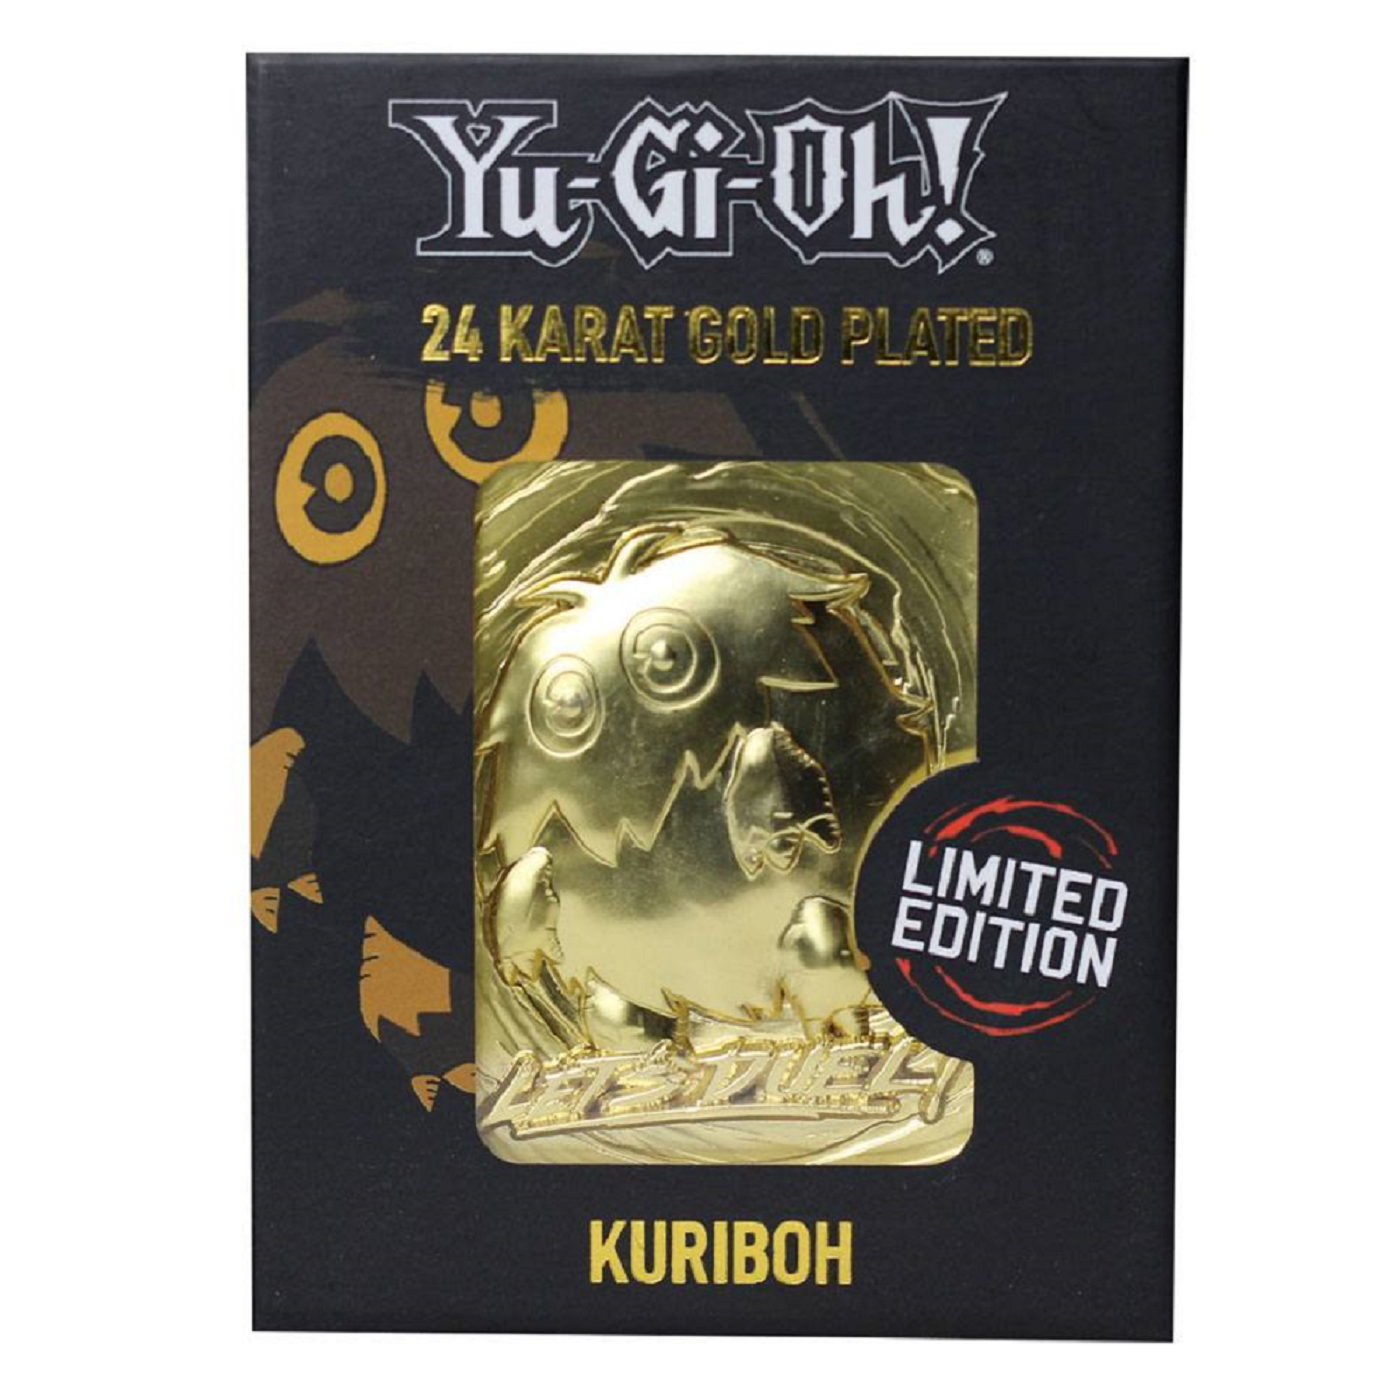 YU-GI-OH! (vergoldet) Karte Kuriboh Kartenspiel Replik